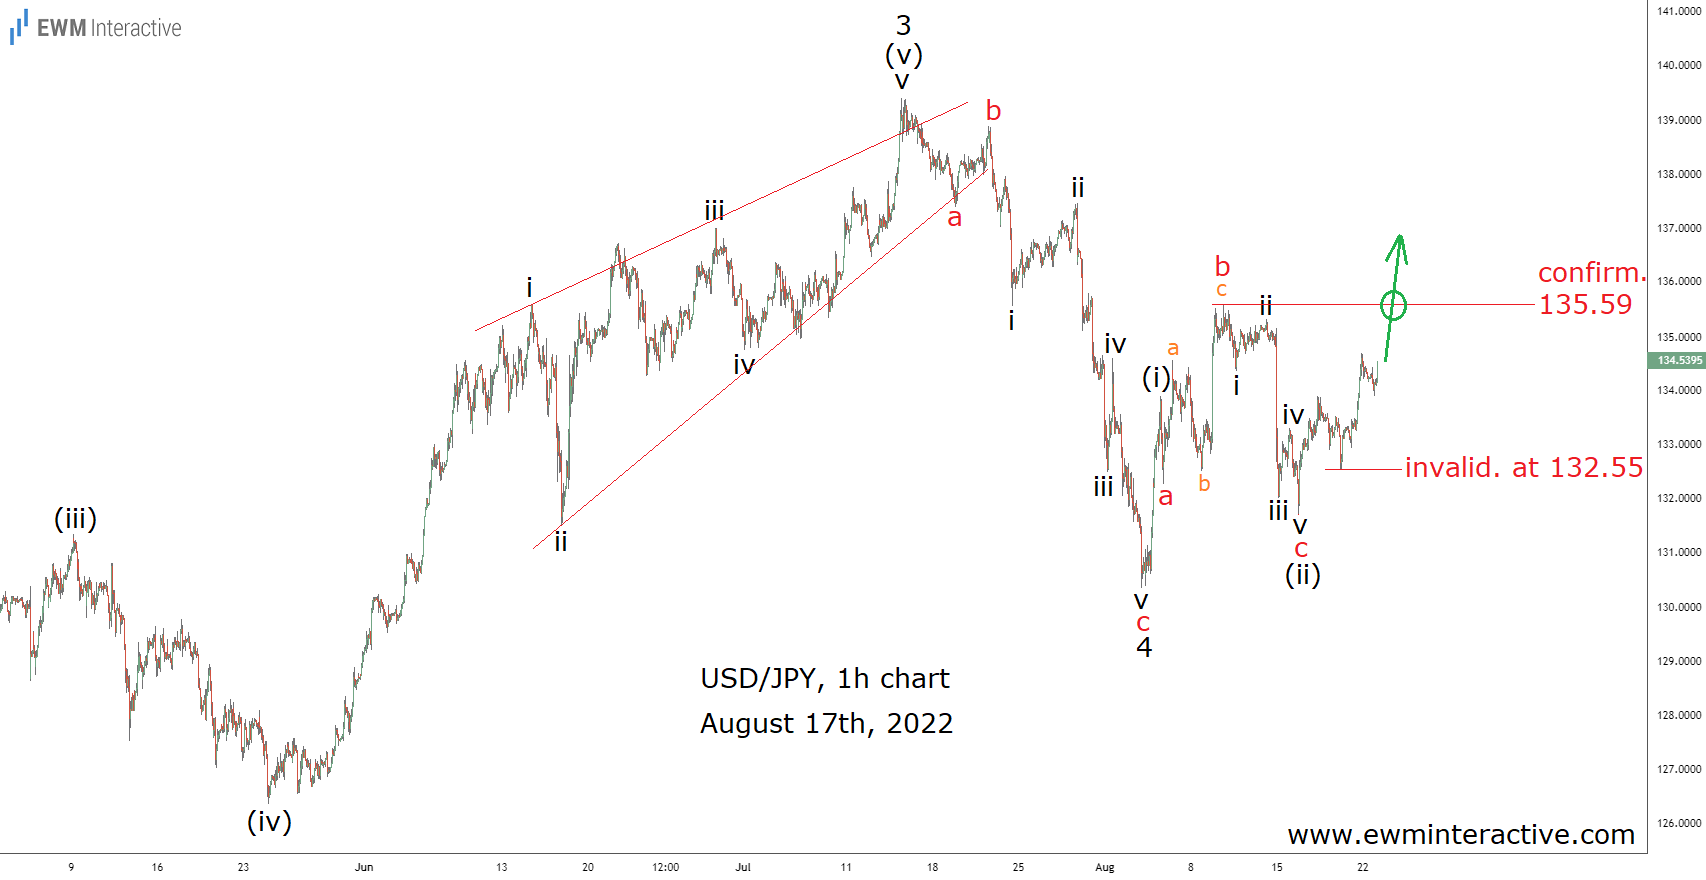 USD/JPY 1-Hr Chart, 17th Aug, 2022